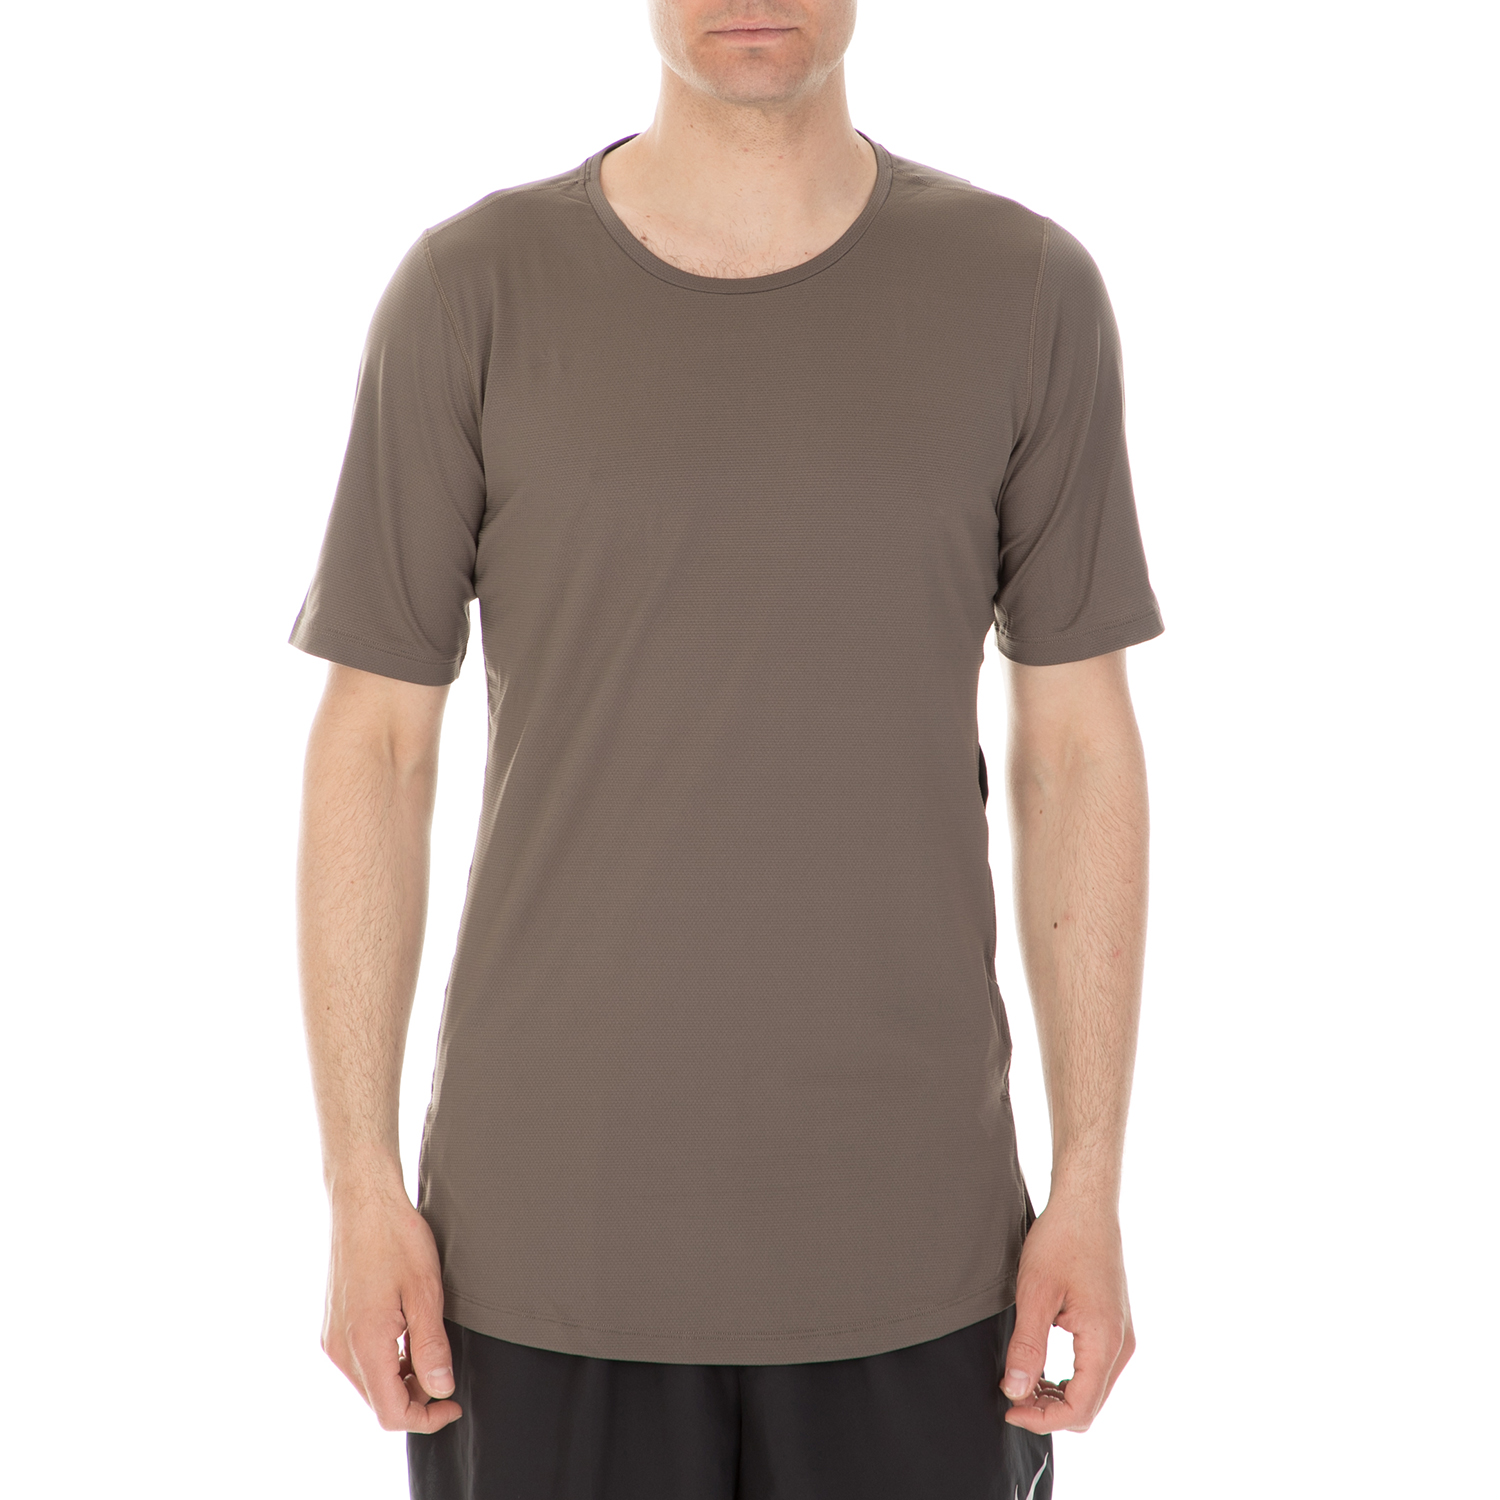 NIKE - Ανδρική κοντομάνικη μπλούζα NIKE TOP SS FTTD UTILITY χακί Ανδρικά/Ρούχα/Αθλητικά/T-shirt